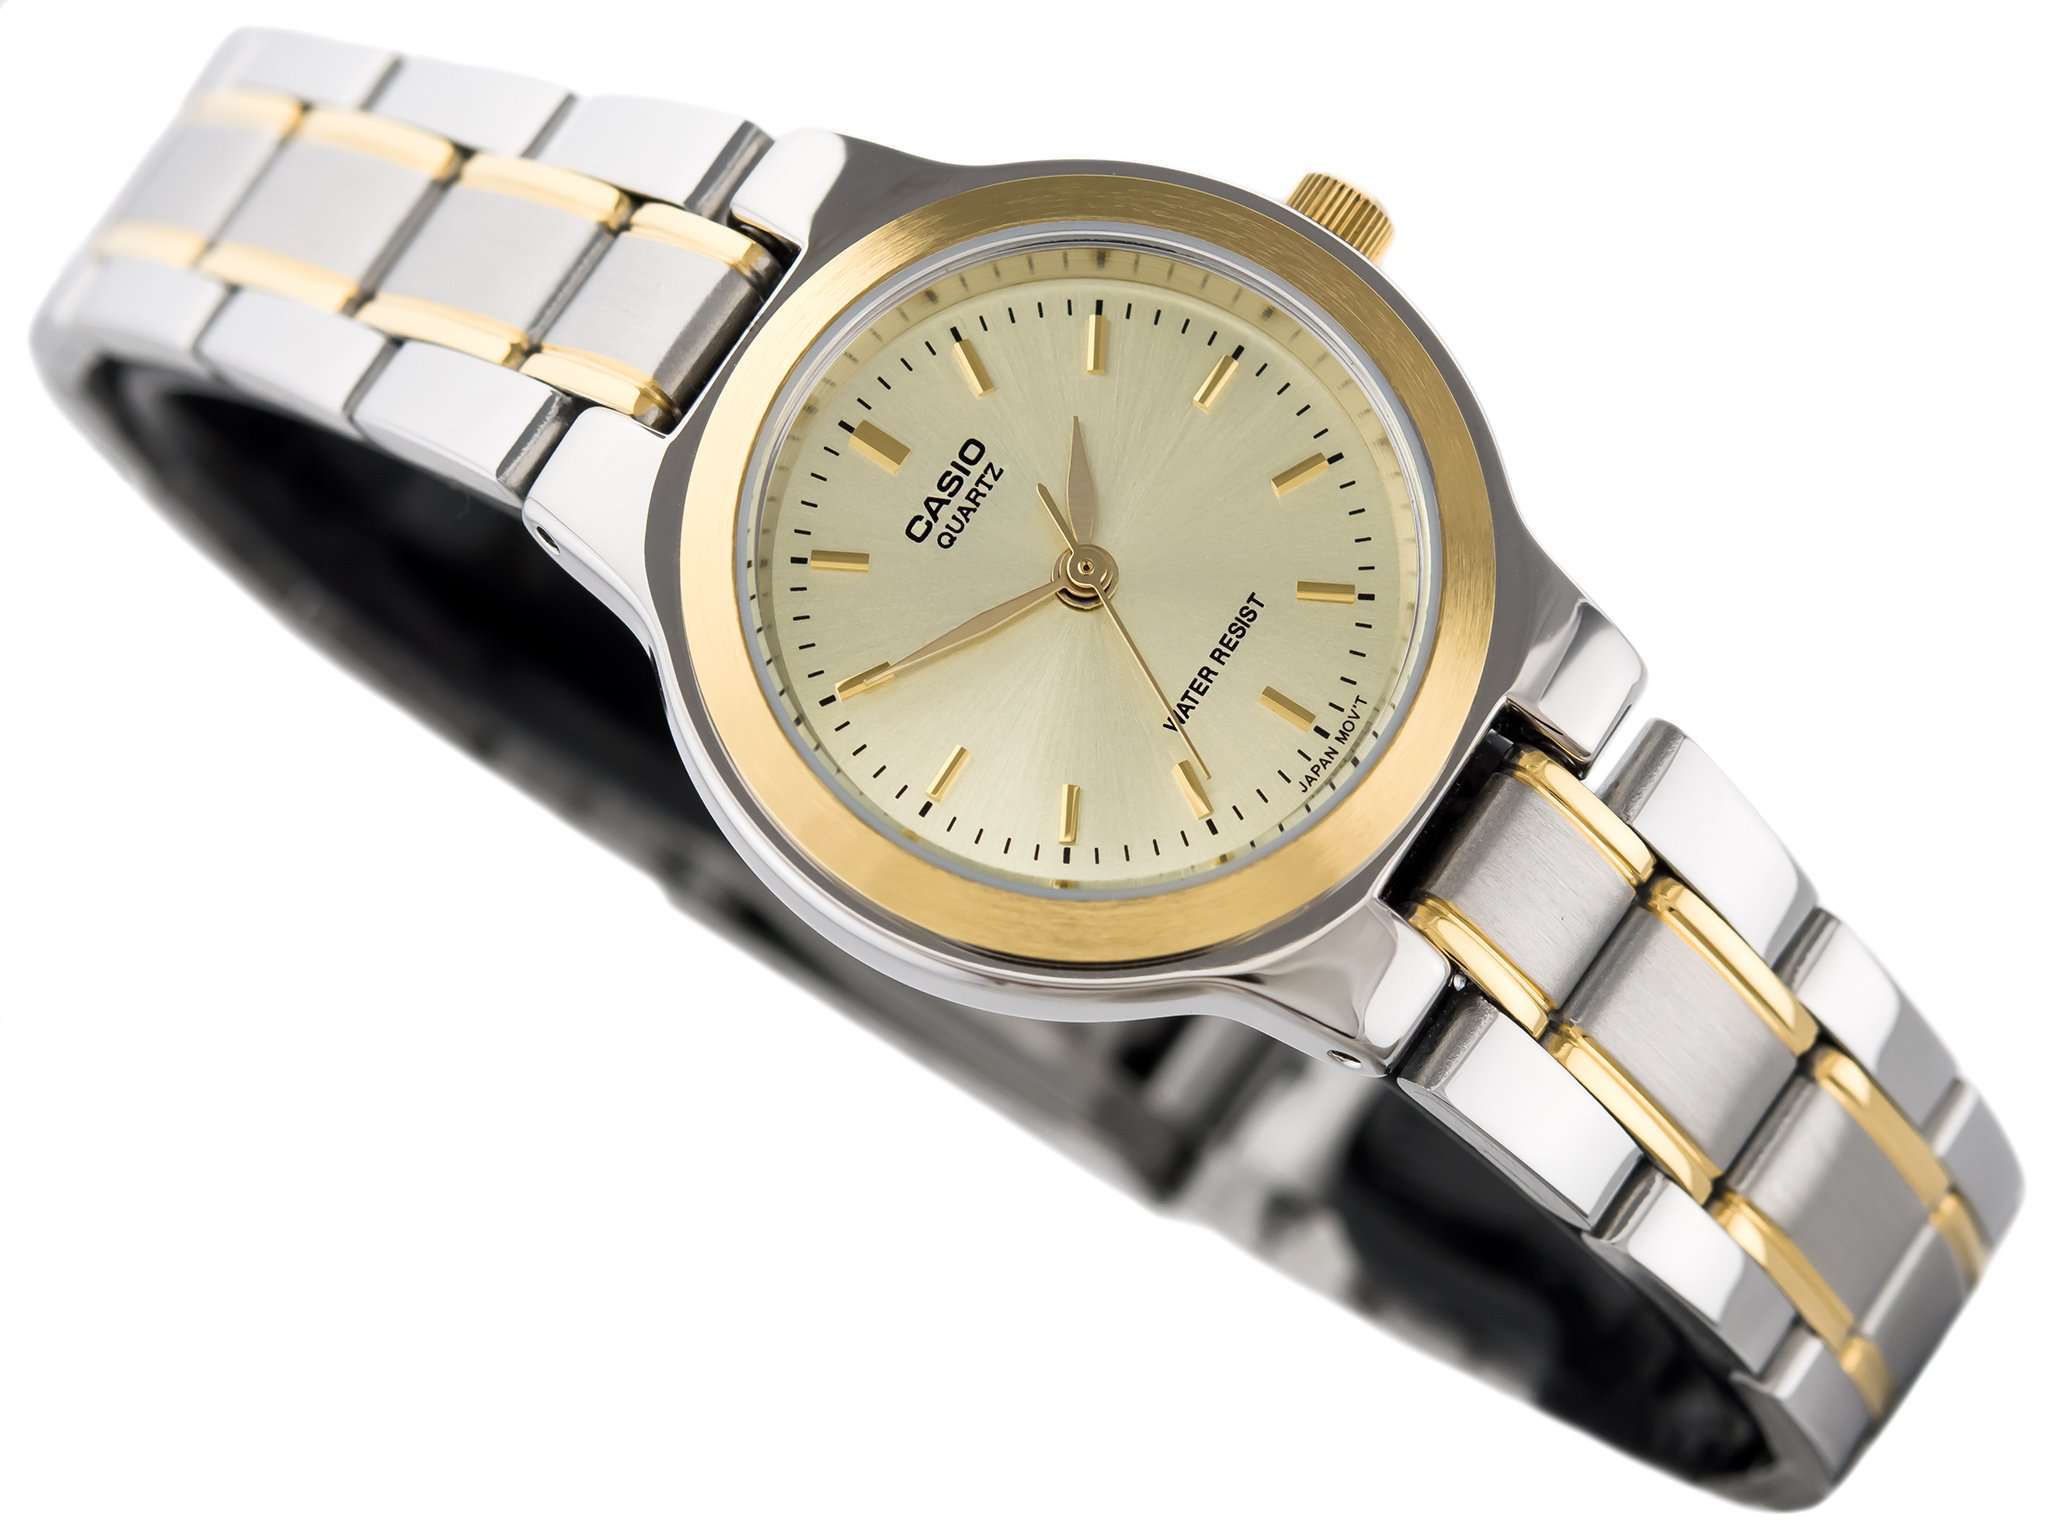 Casio Vintage LTP-1131G-9A Silver & Gold Stainless Steel Strap Watch for Women-Watch Portal Philippines